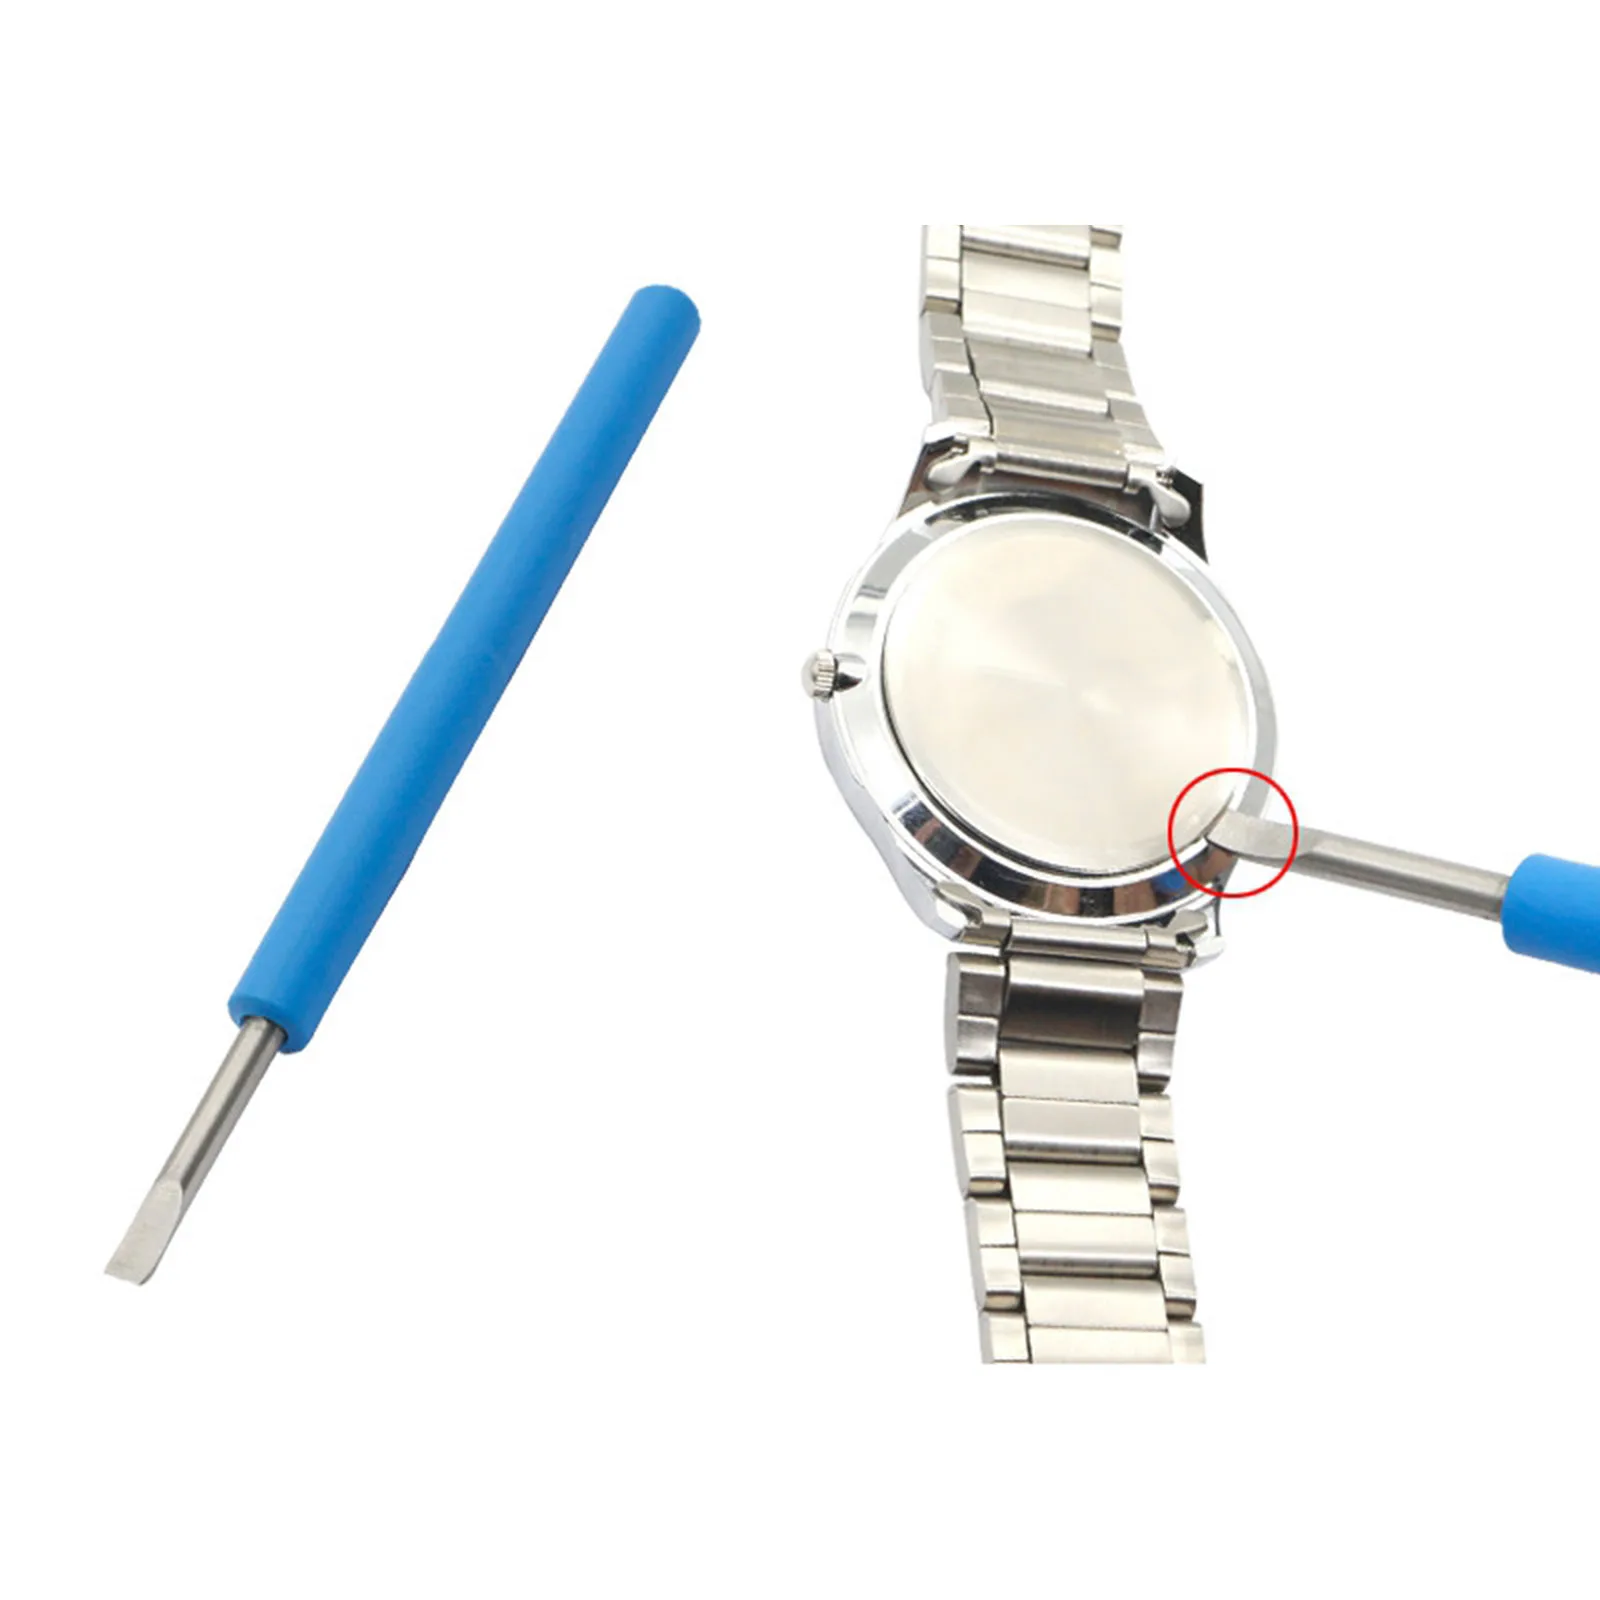 Metal Watch Case Opener Lever Snap Watchmaker Battery Change Repair Tool